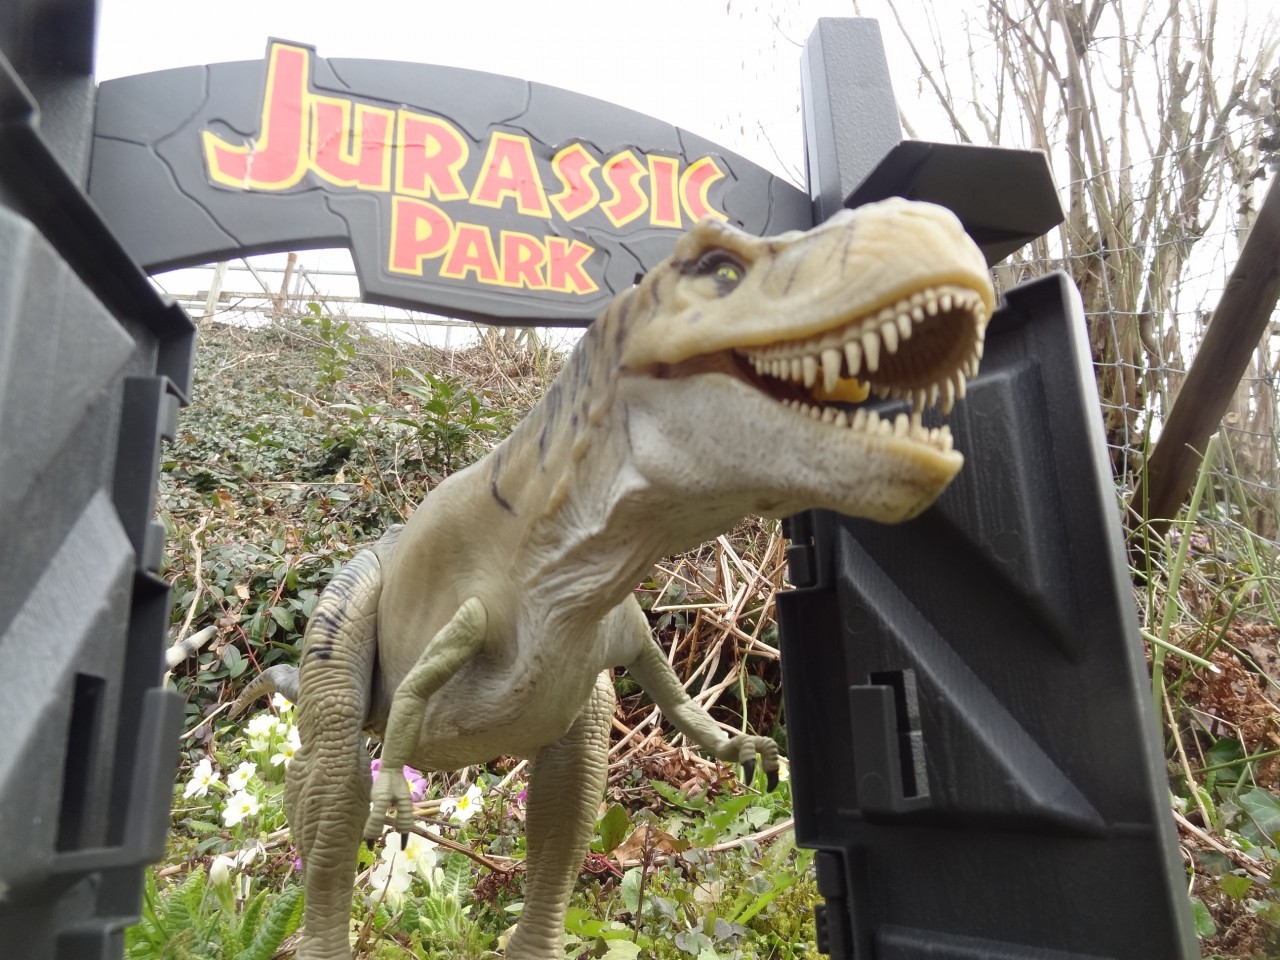 Jurassic Park - Figurine Tyrannosaurus Rex Diorama